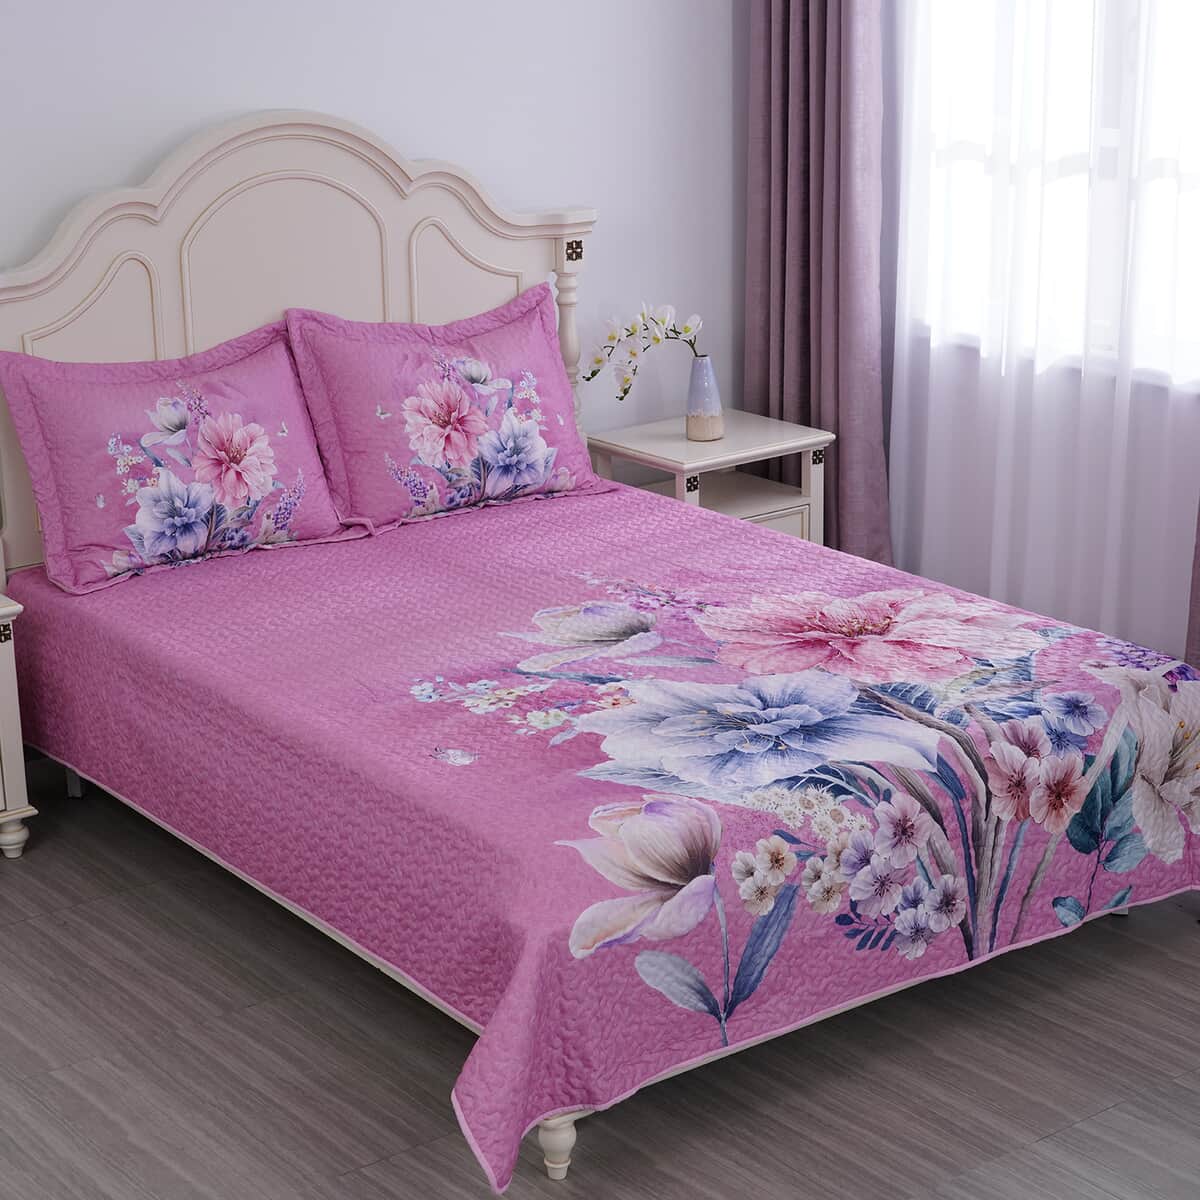 Homesmart Pink Floral Digital Print 100% Microfiber Quilted Bedspread and 2 Pillow Shams - King image number 0